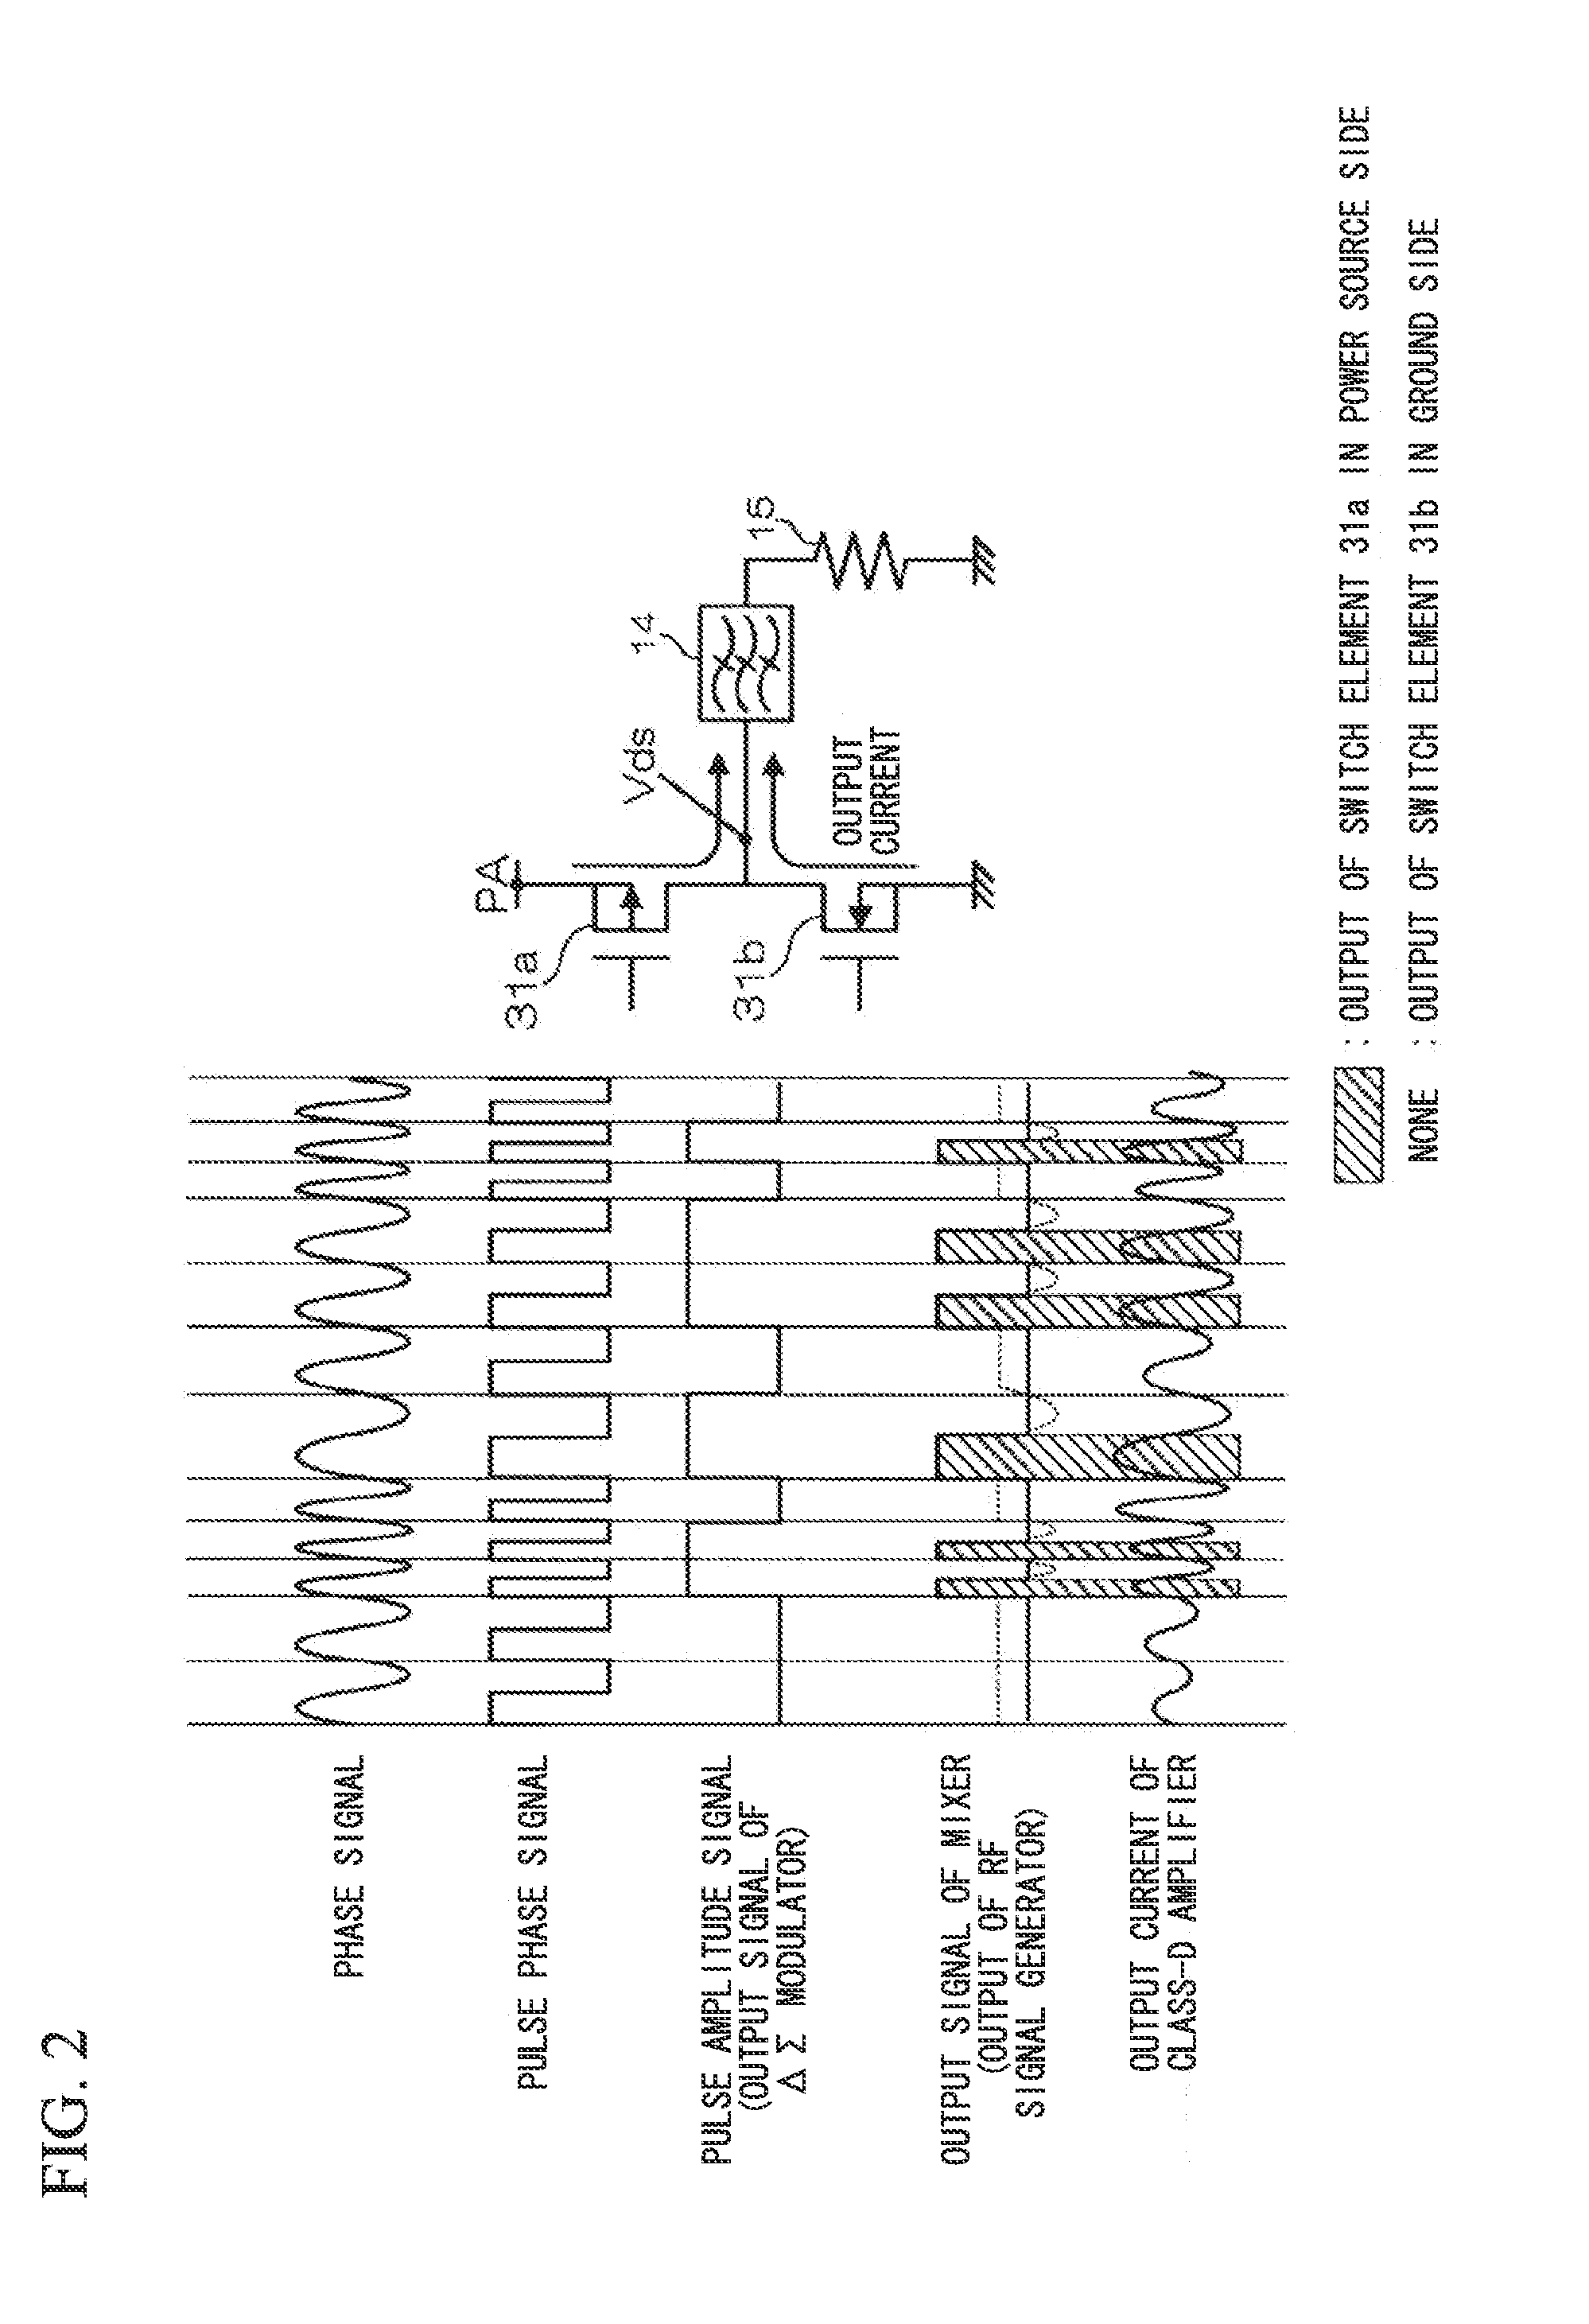 RF signal generation circuit and wireless transmitter